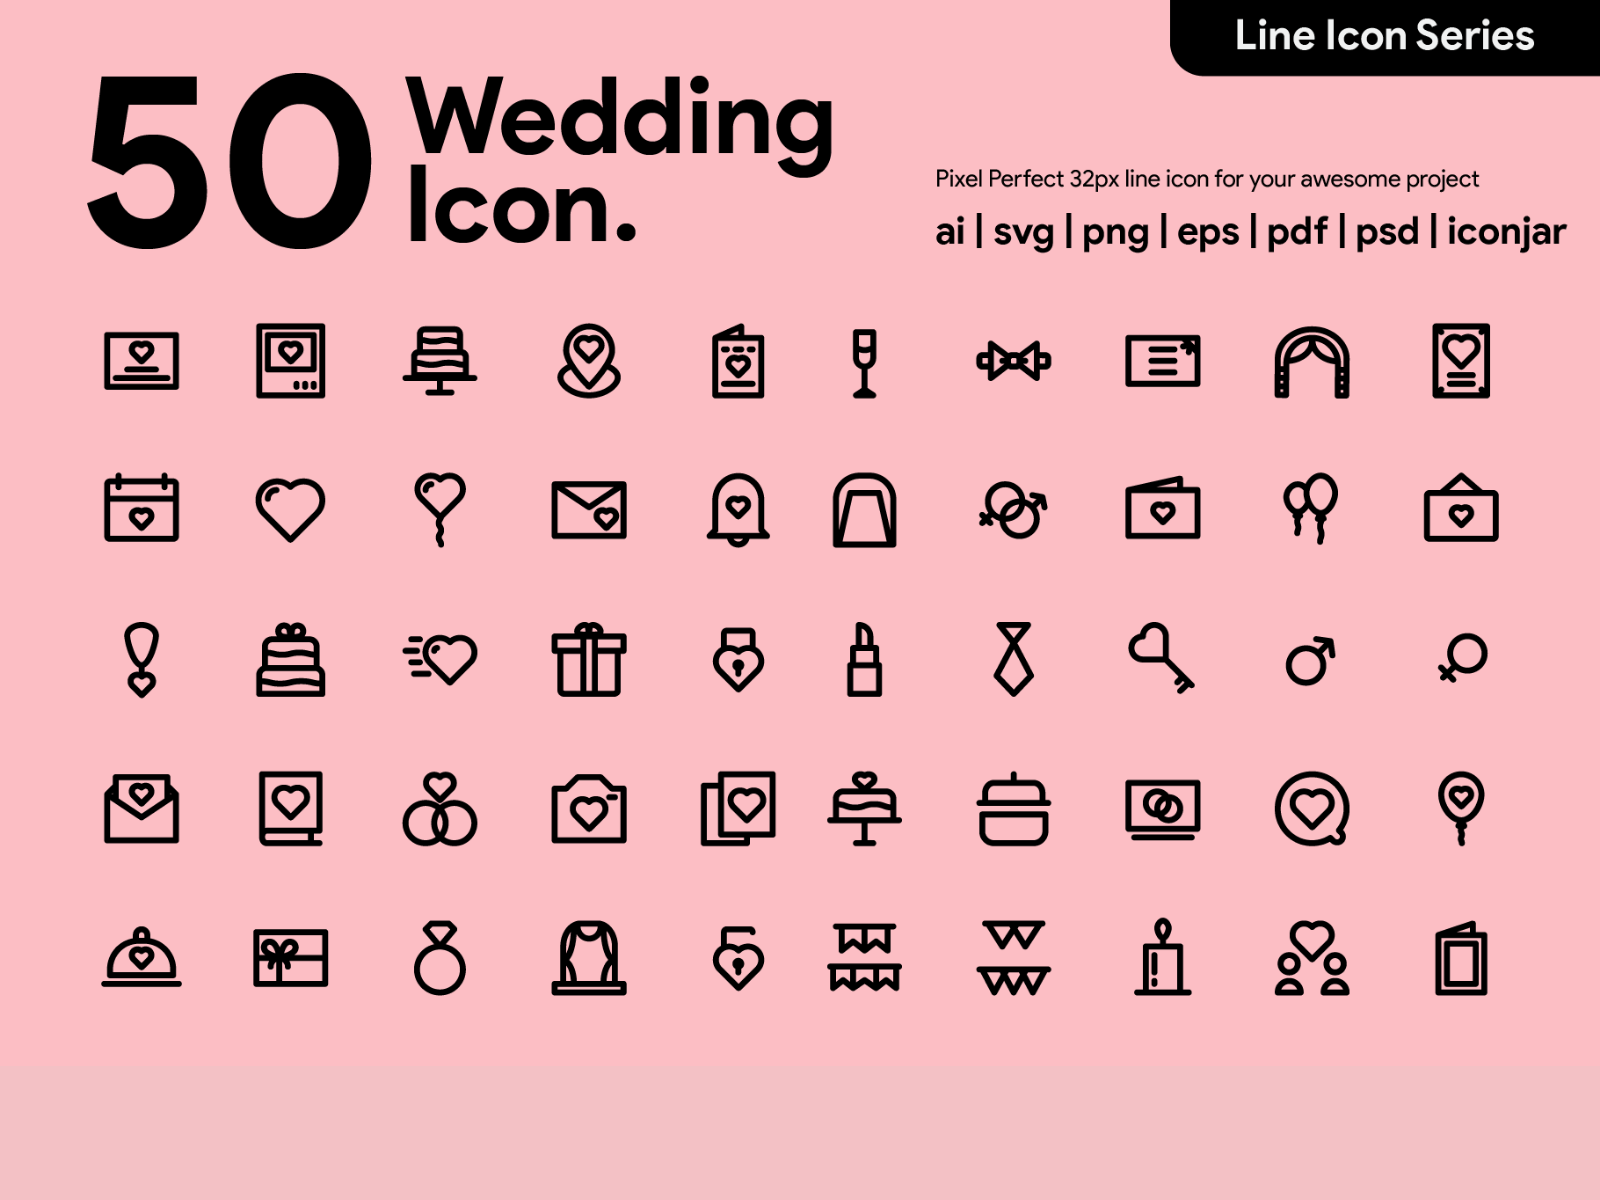 App icons design idea #285: Kawaicon - 50 Wedding Line Icons